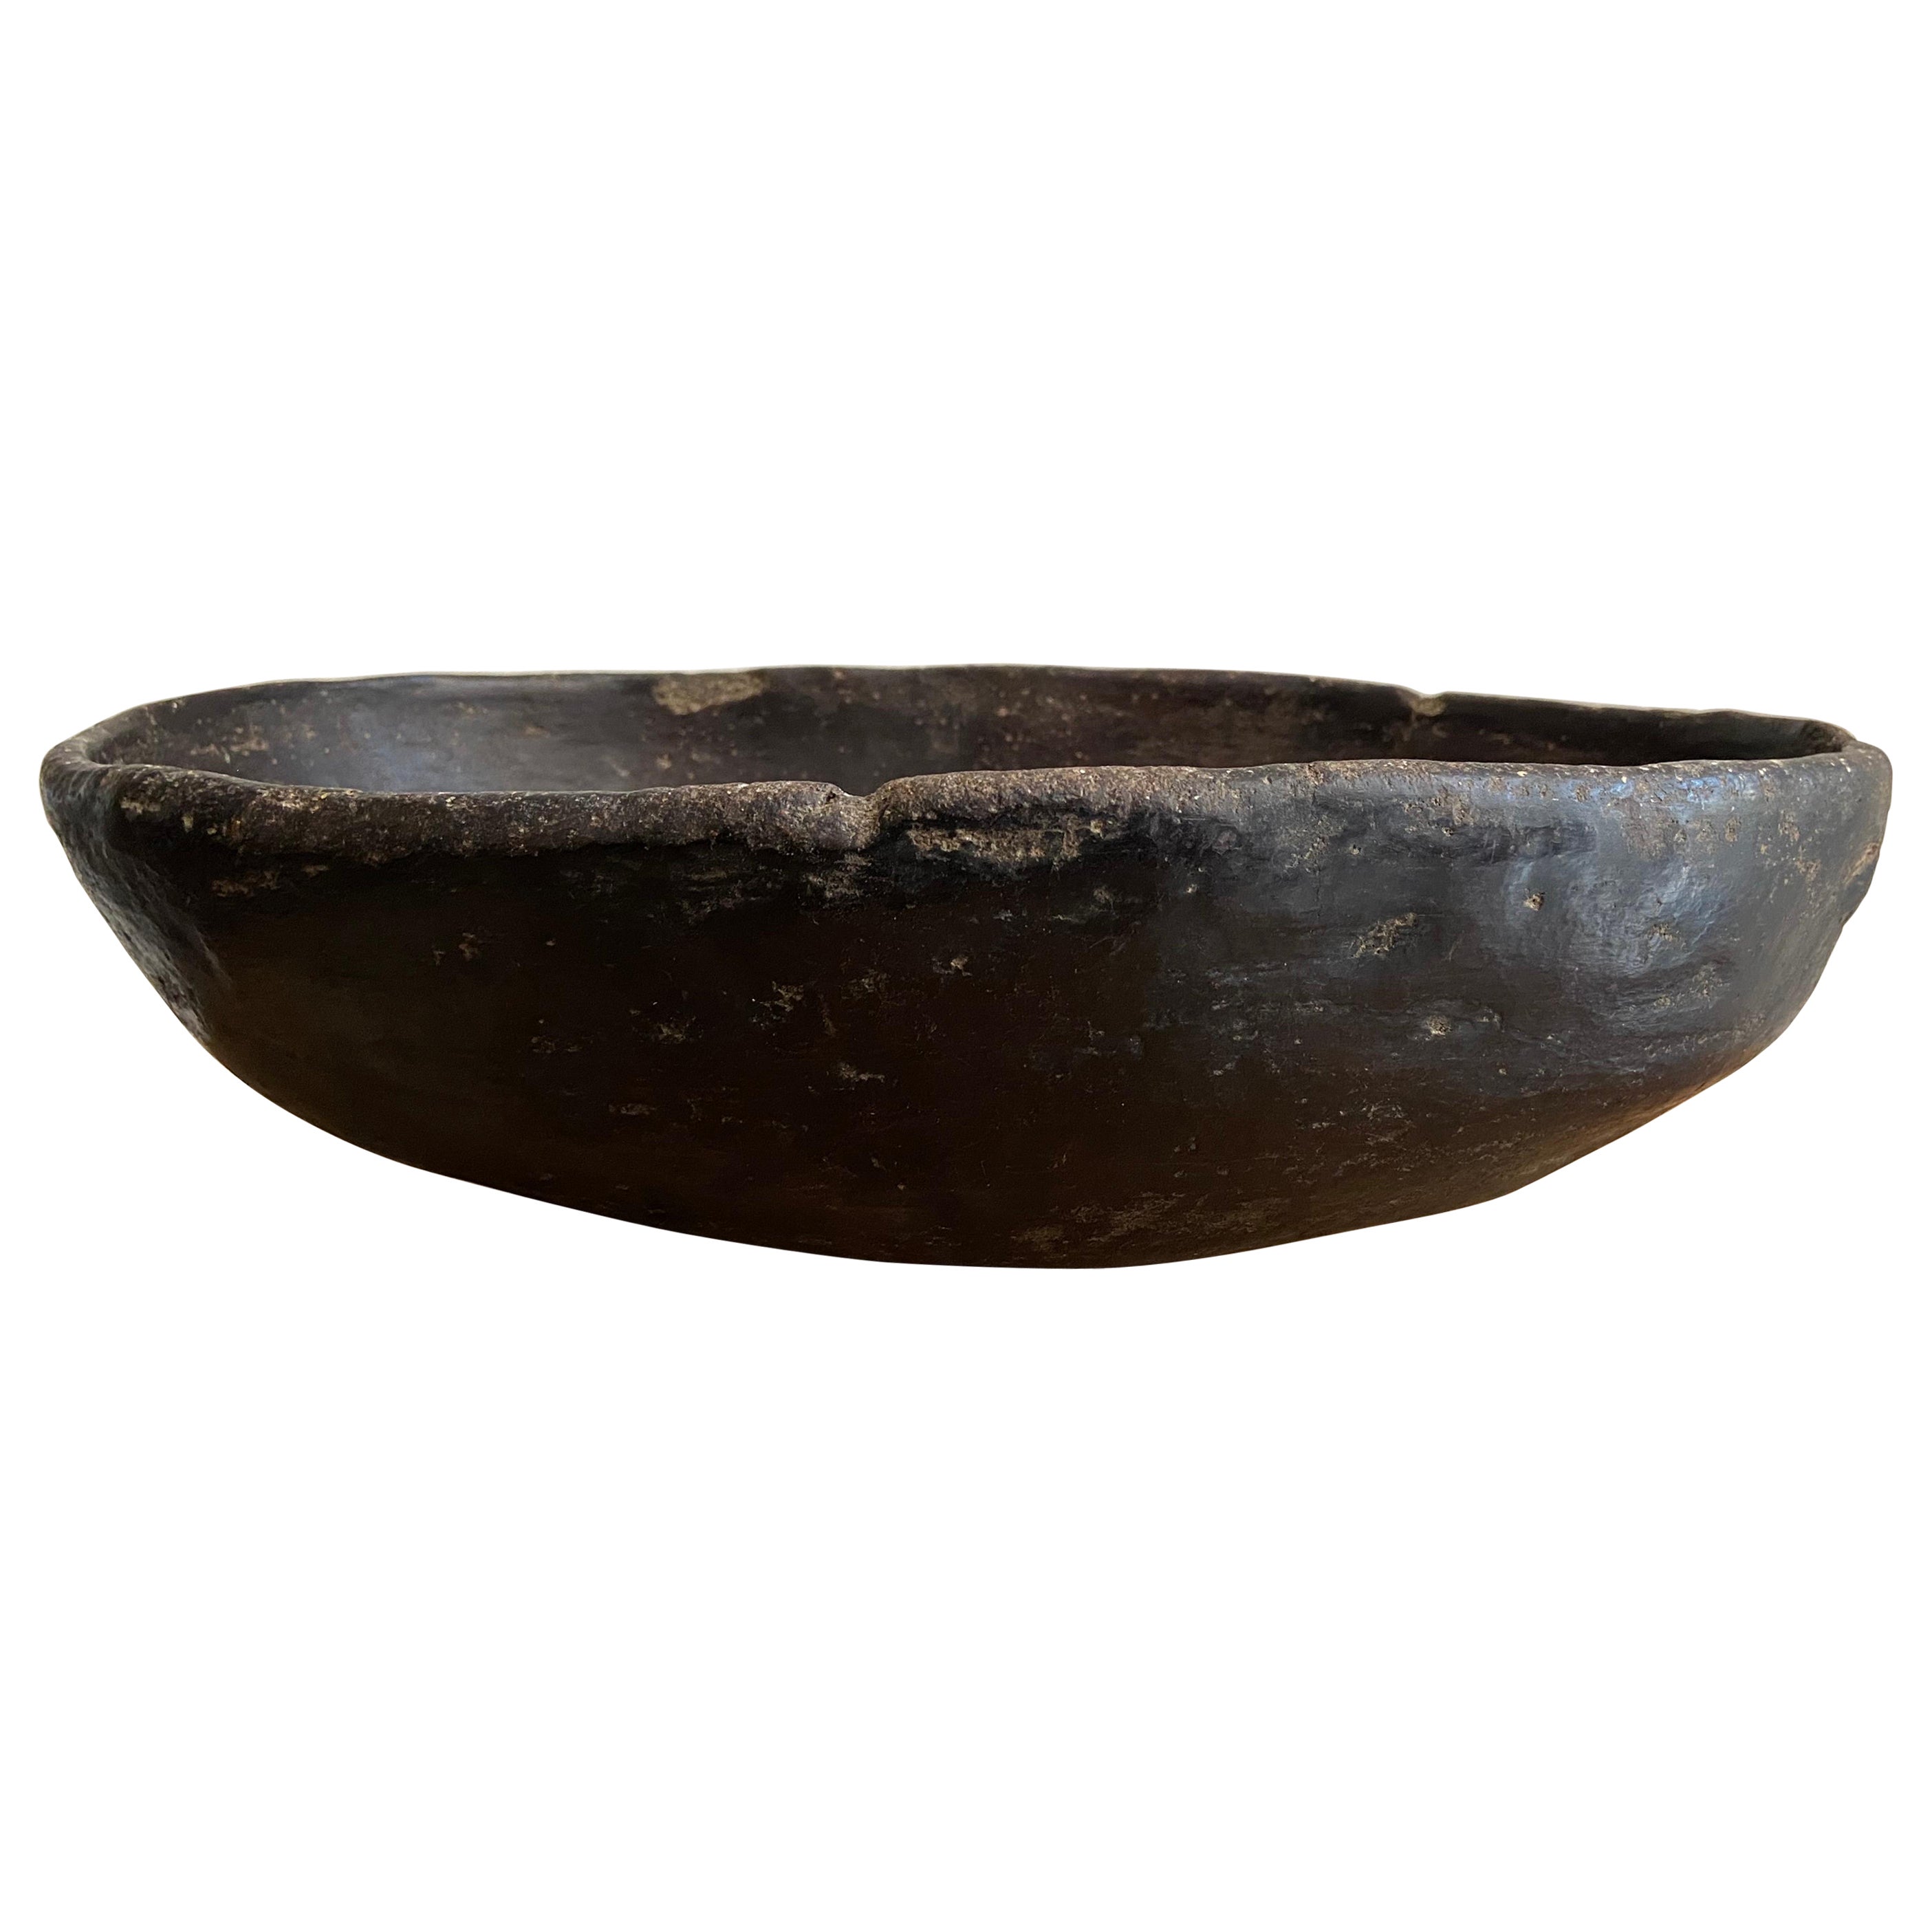 Primitive Styled Ceramic Bowl From The Mixteca Region of Oaxaca, Mexico